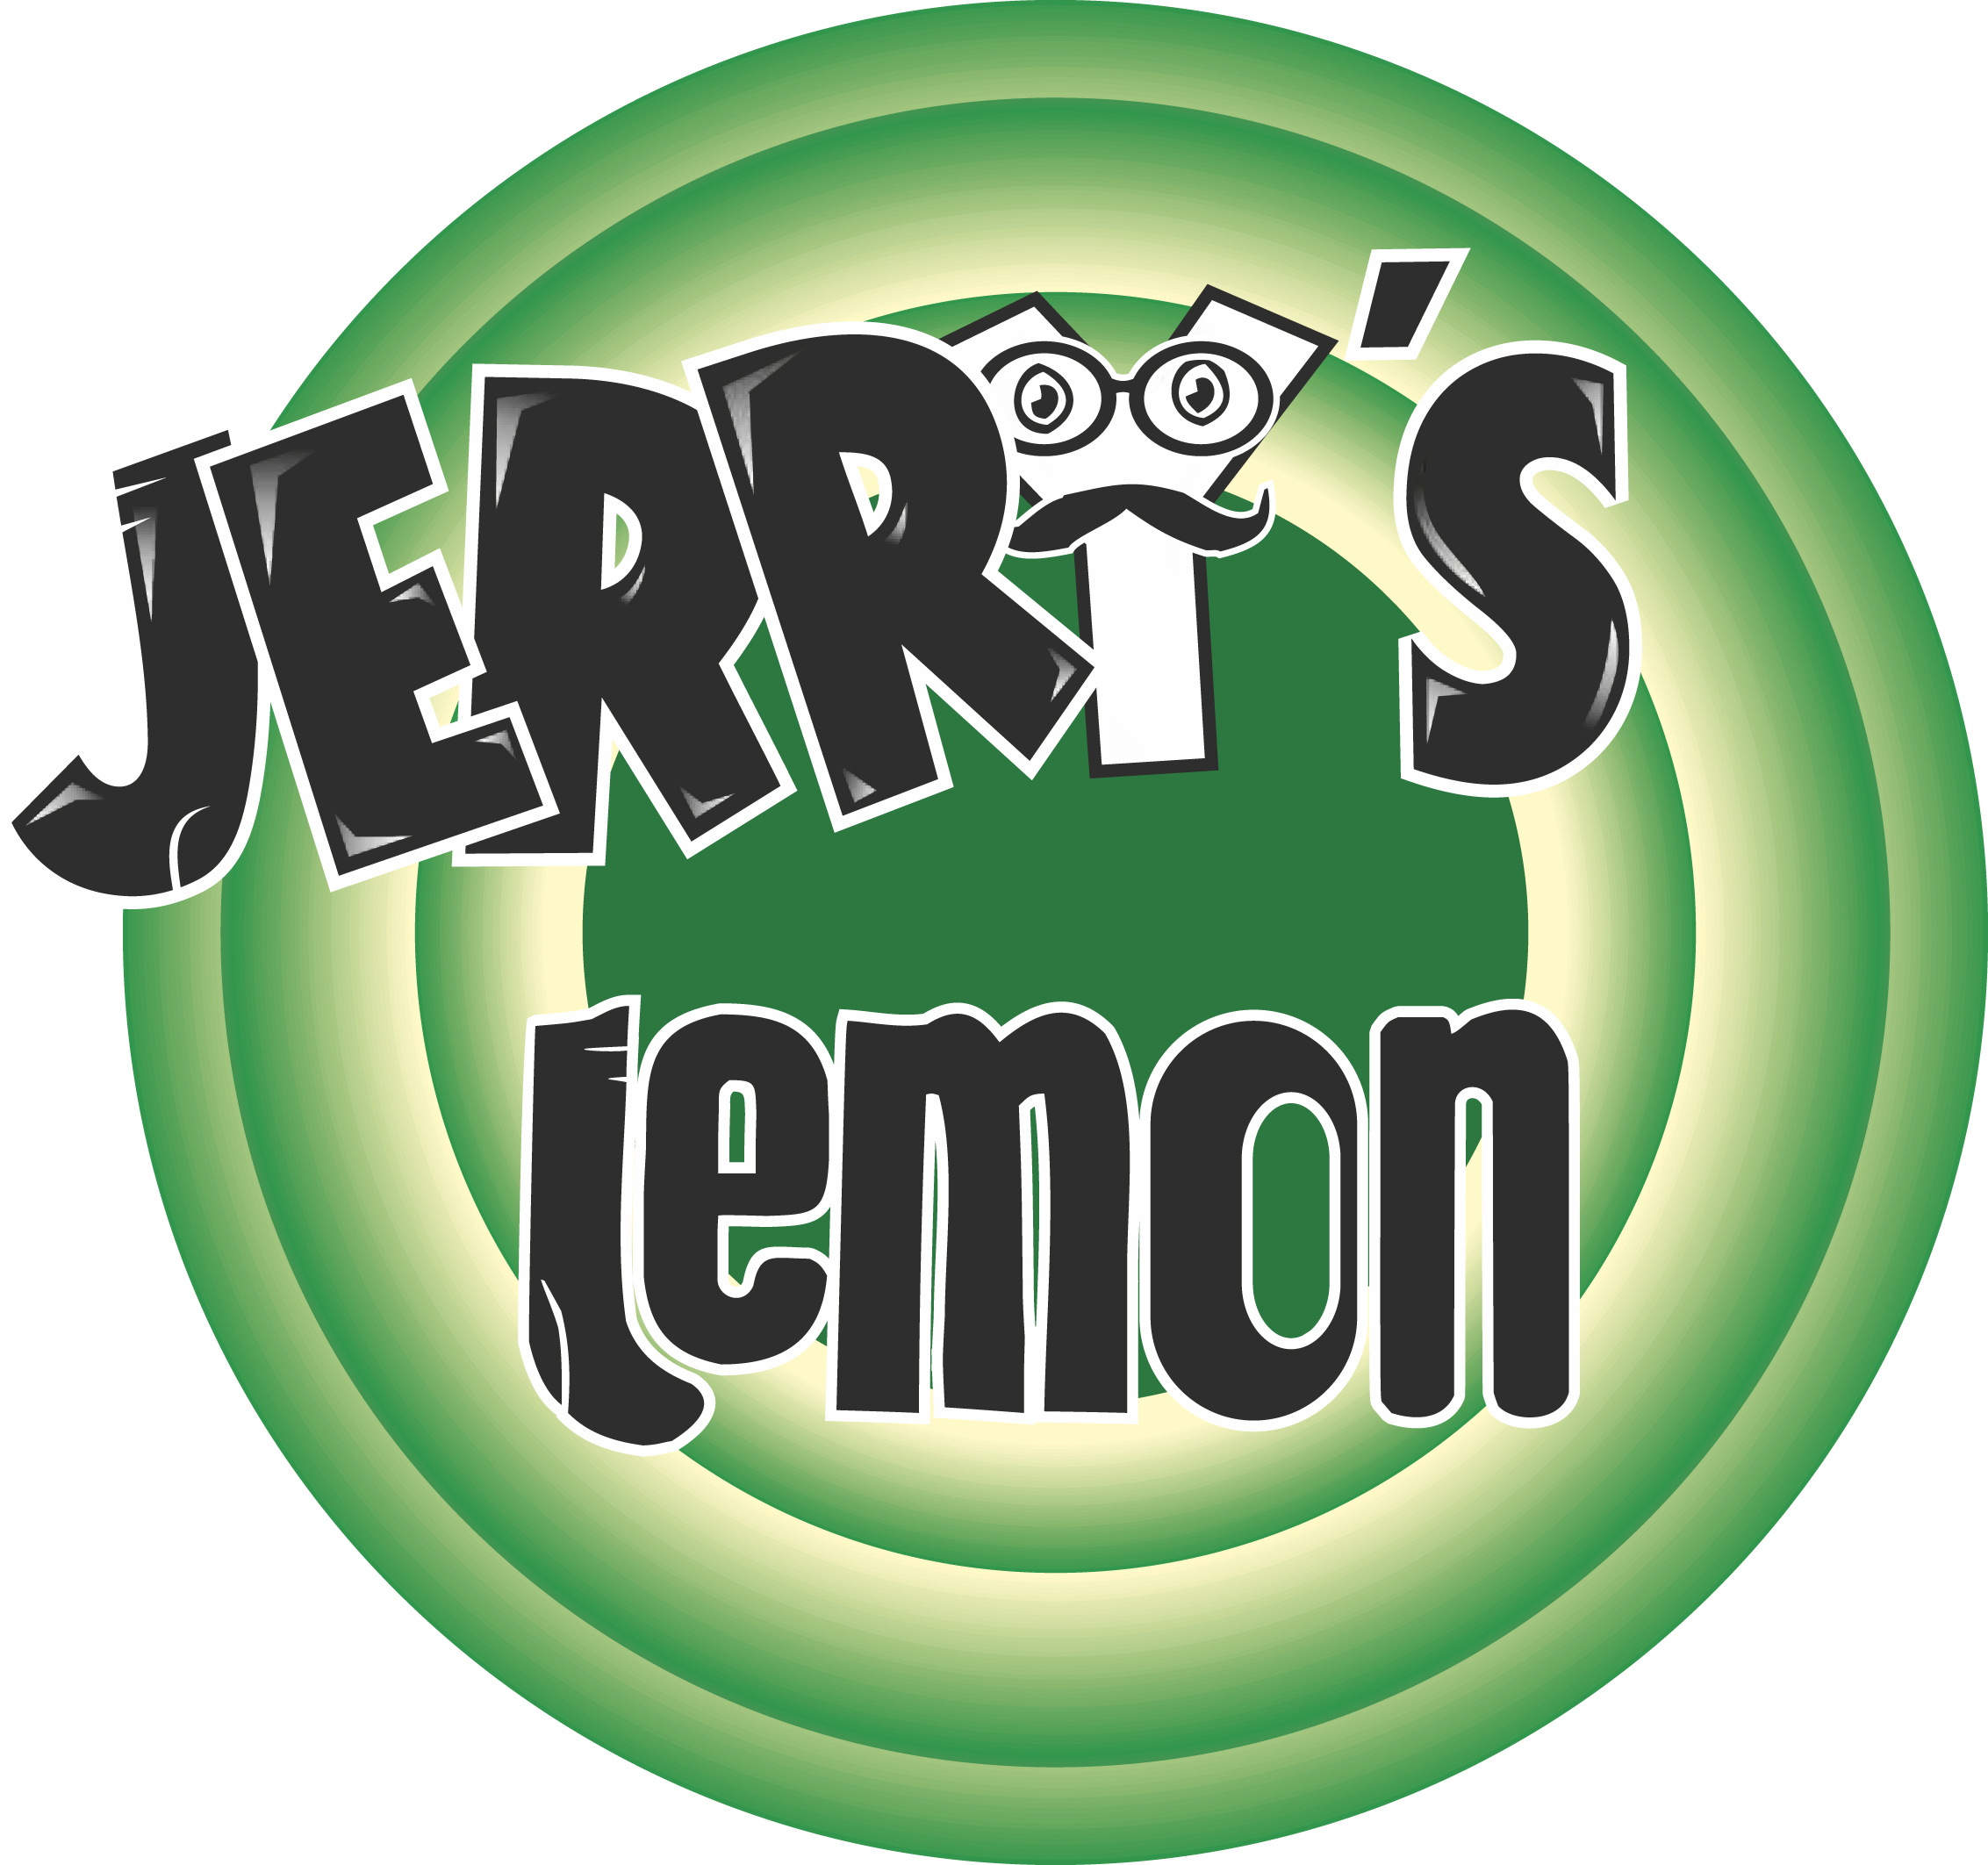 Jerry's Lemon